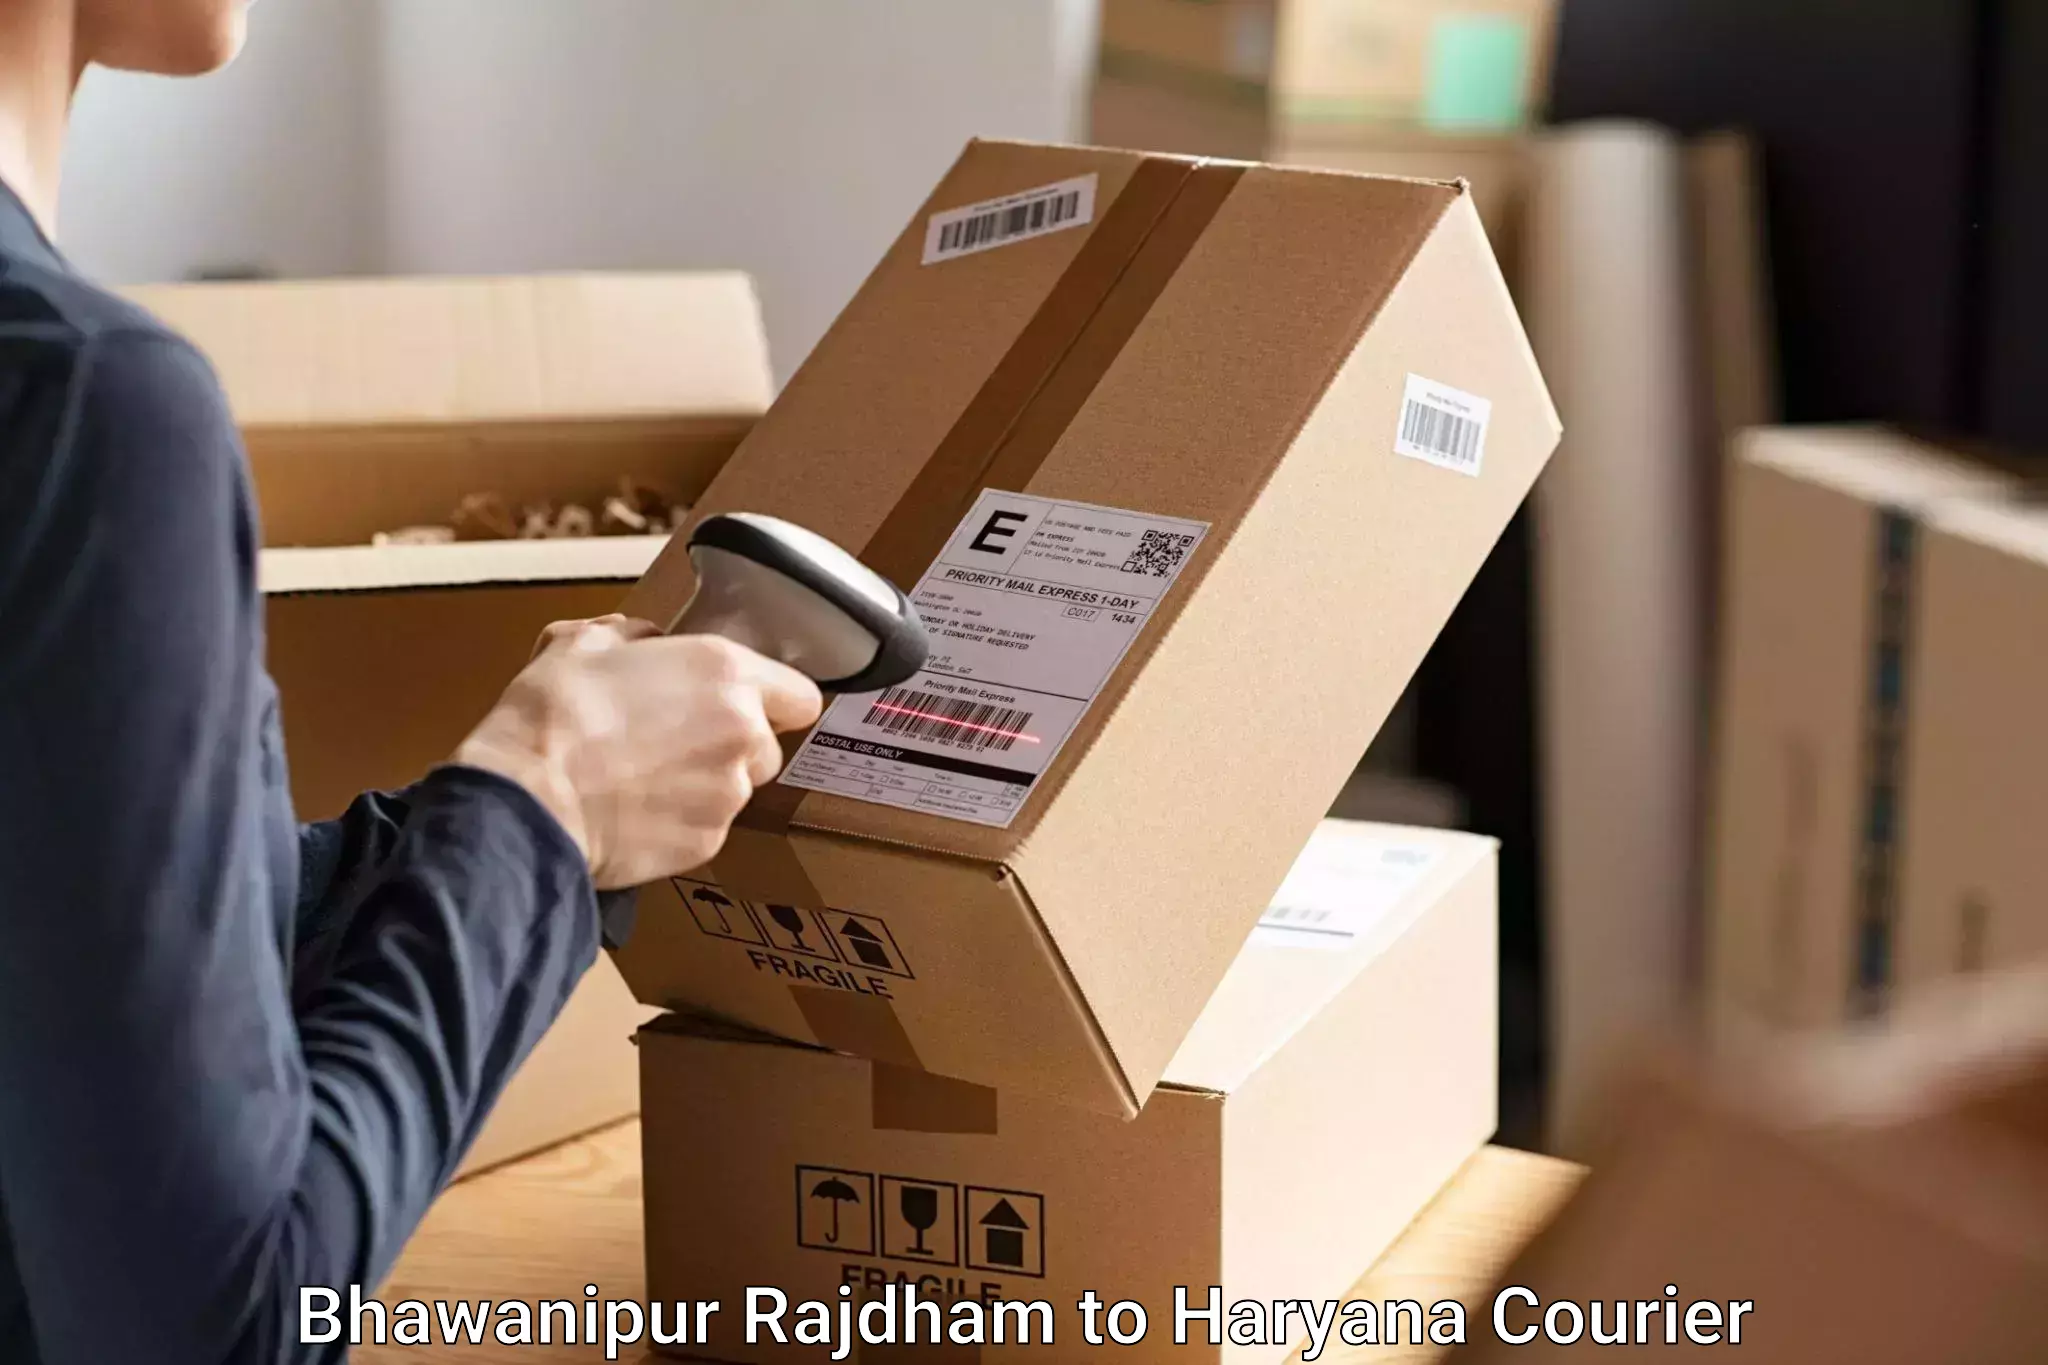 Baggage shipping experience Bhawanipur Rajdham to NCR Haryana